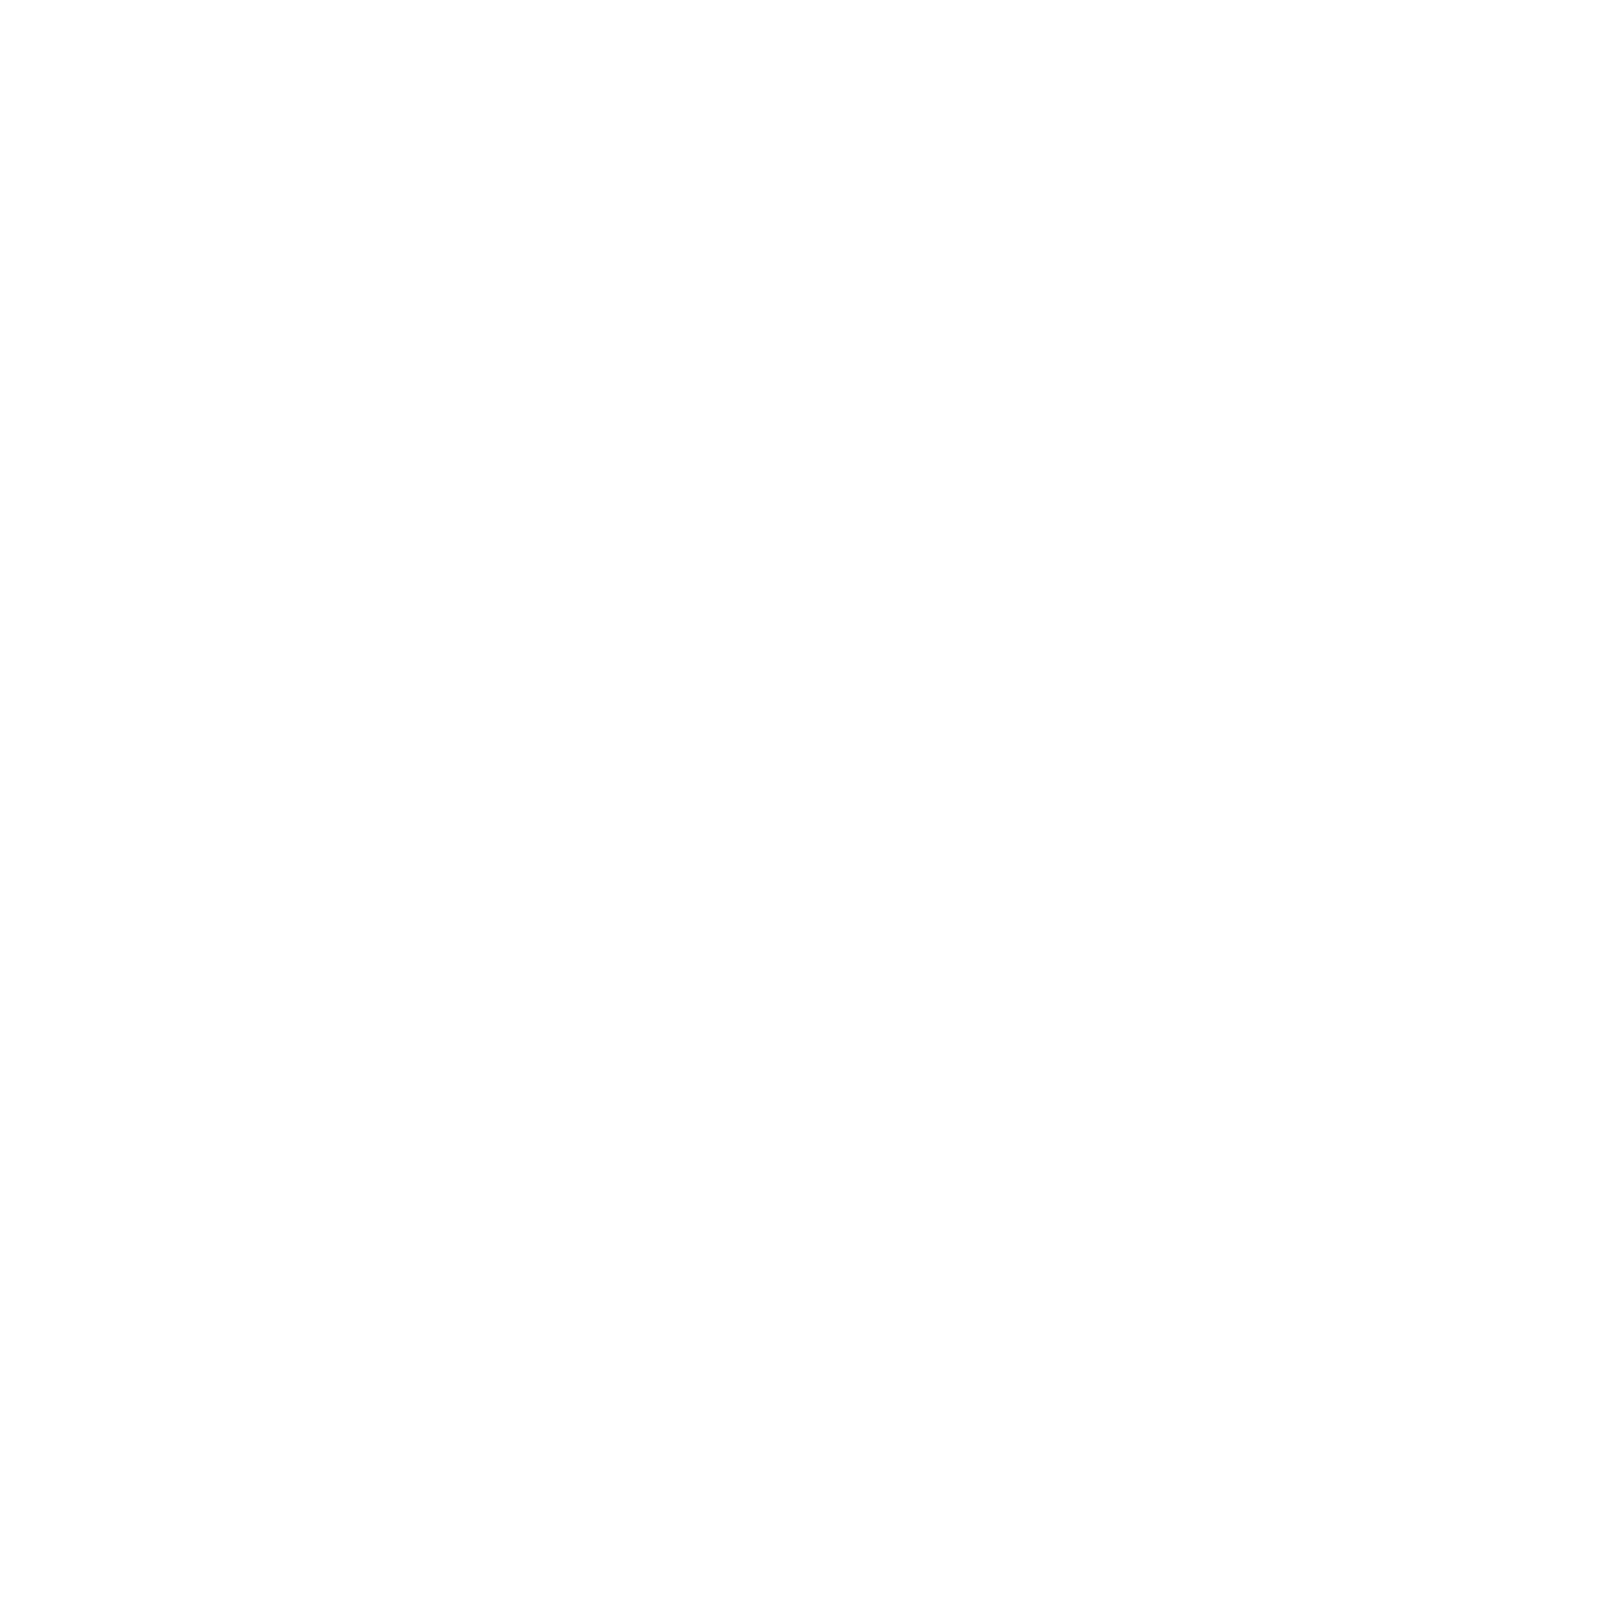 BlackFont Brewhouse